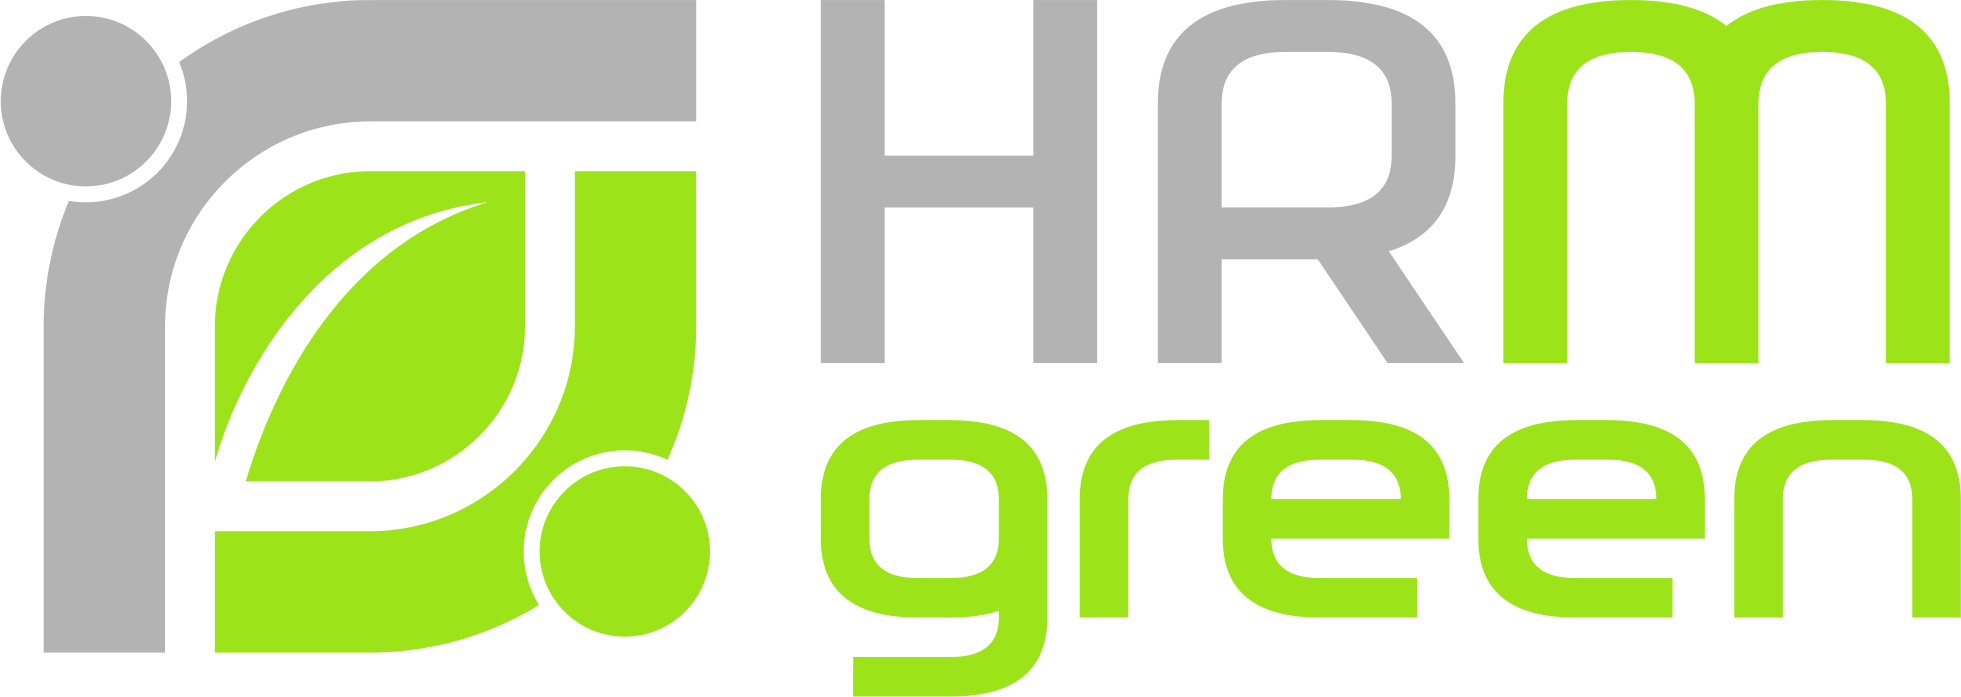 HRM green logo